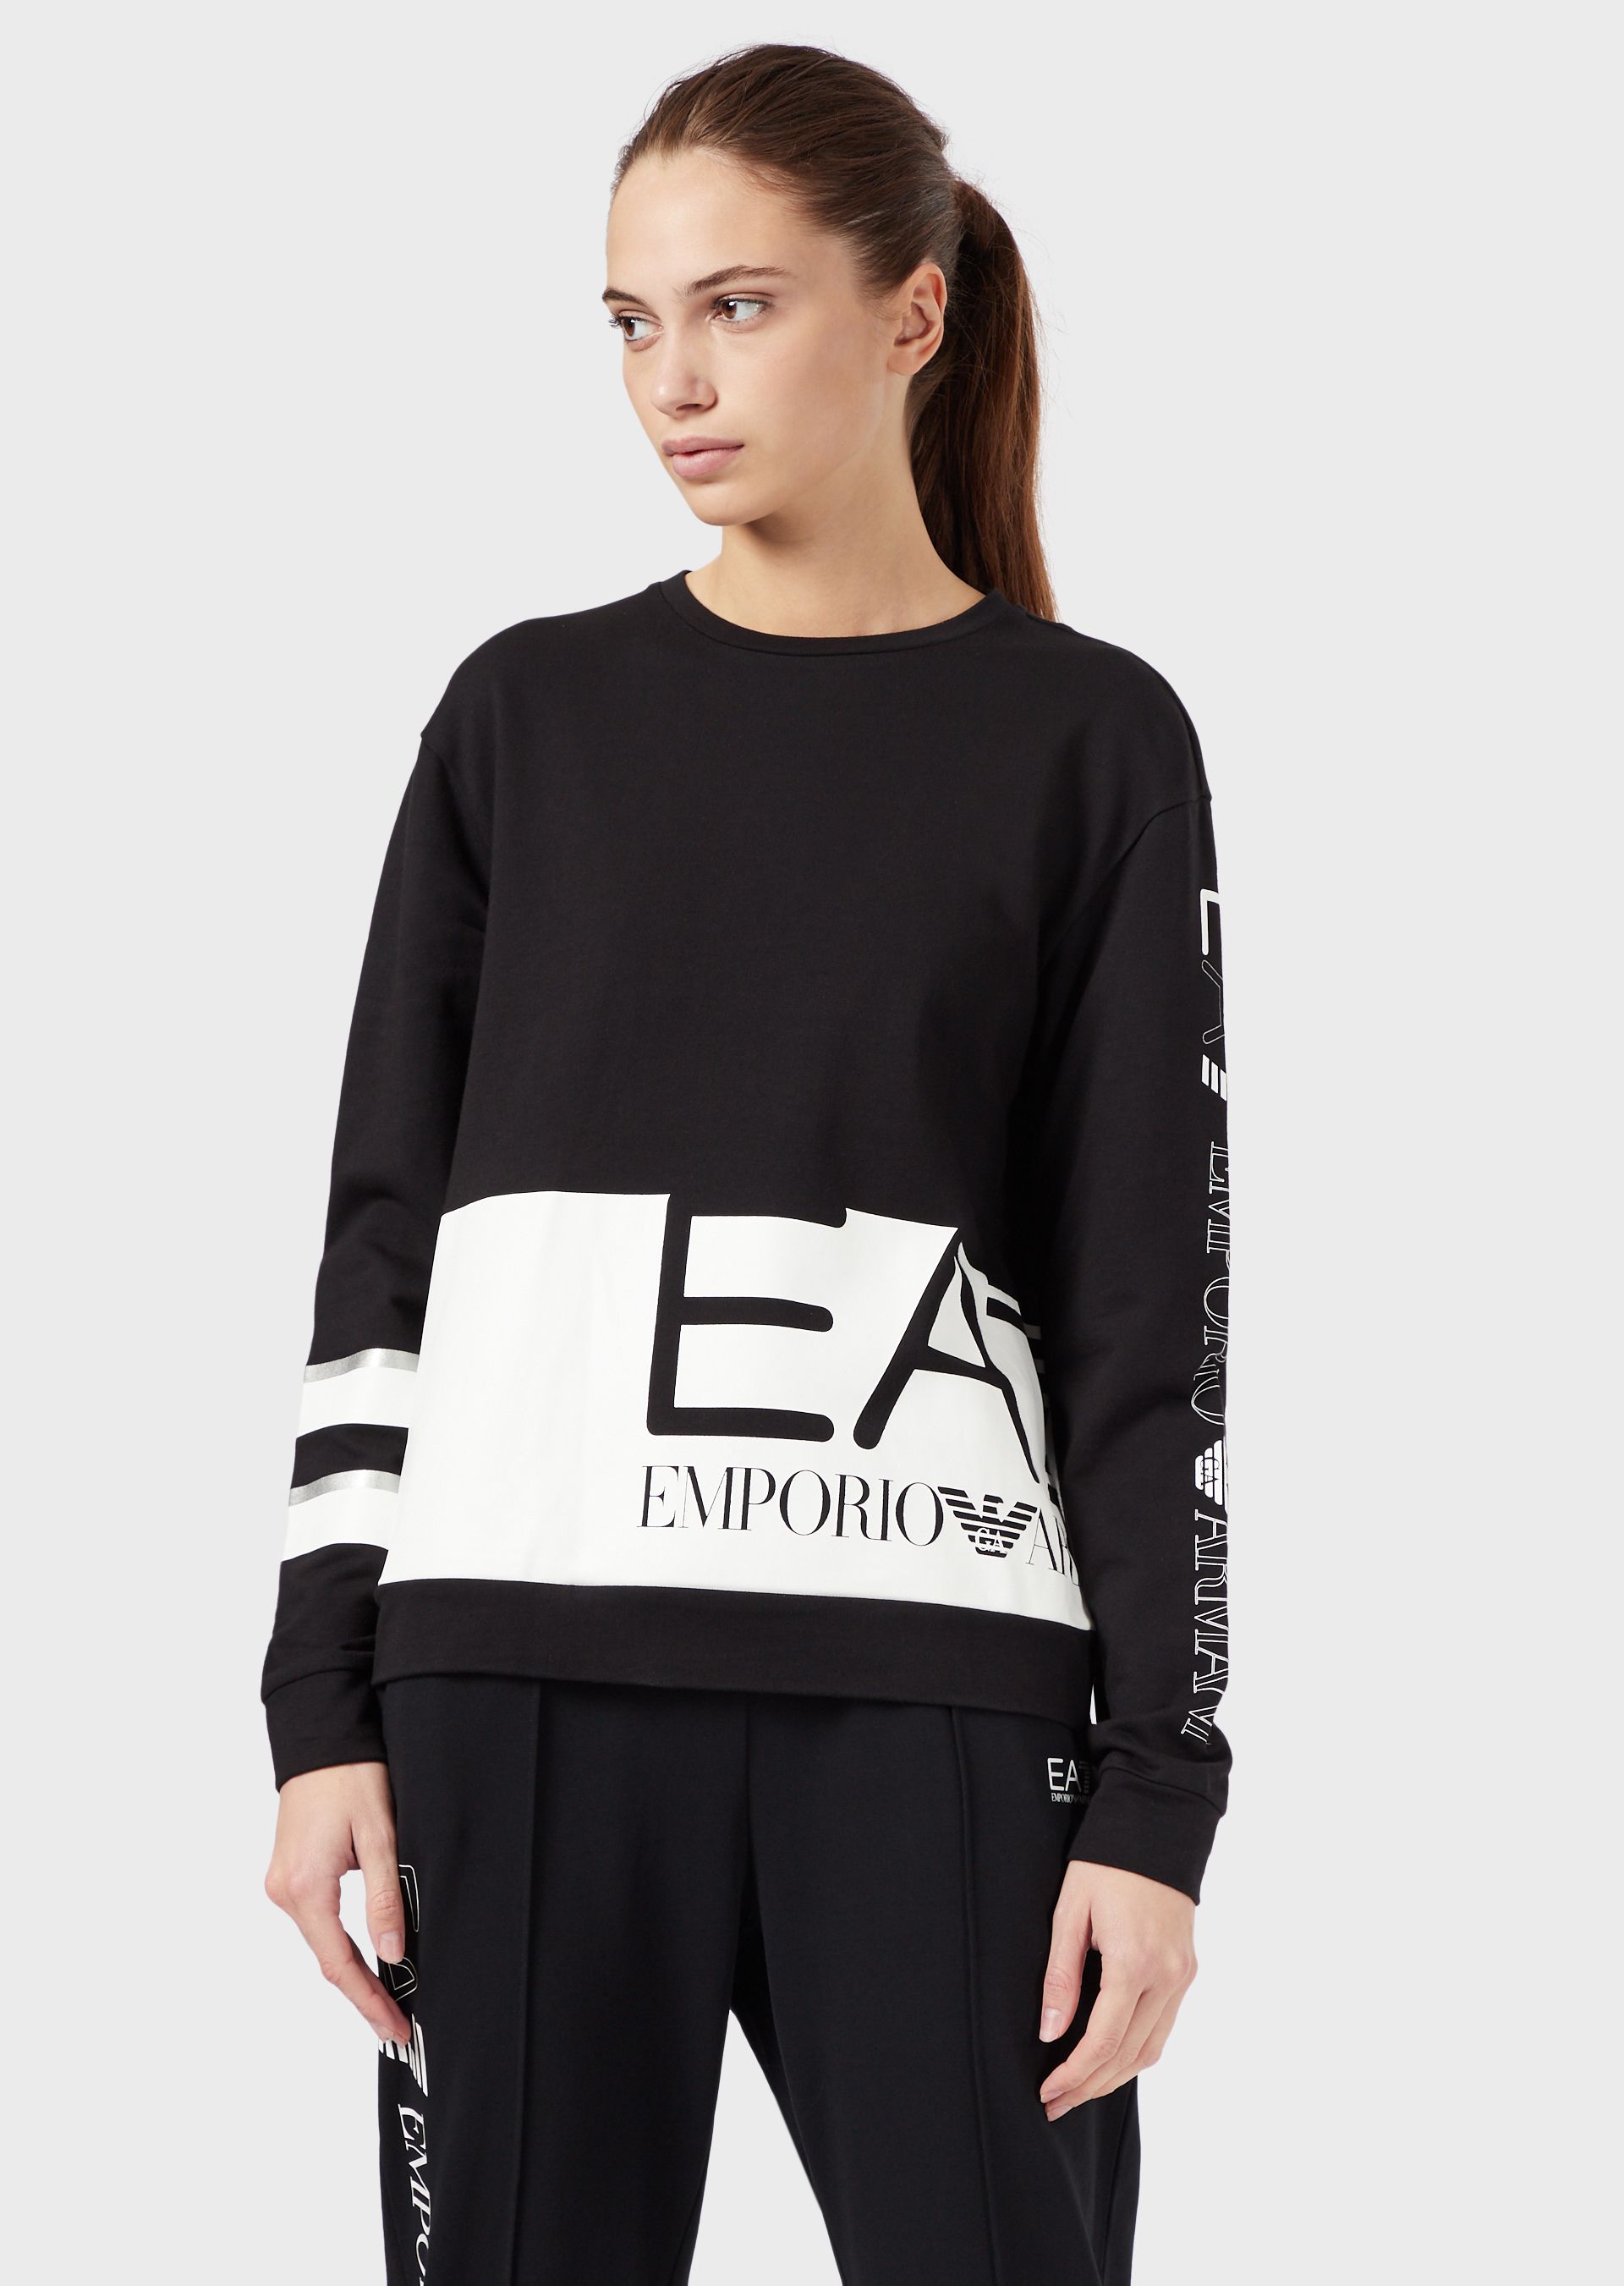 Emporio Armani Sweatshirts - Item 12371108 In Black | ModeSens